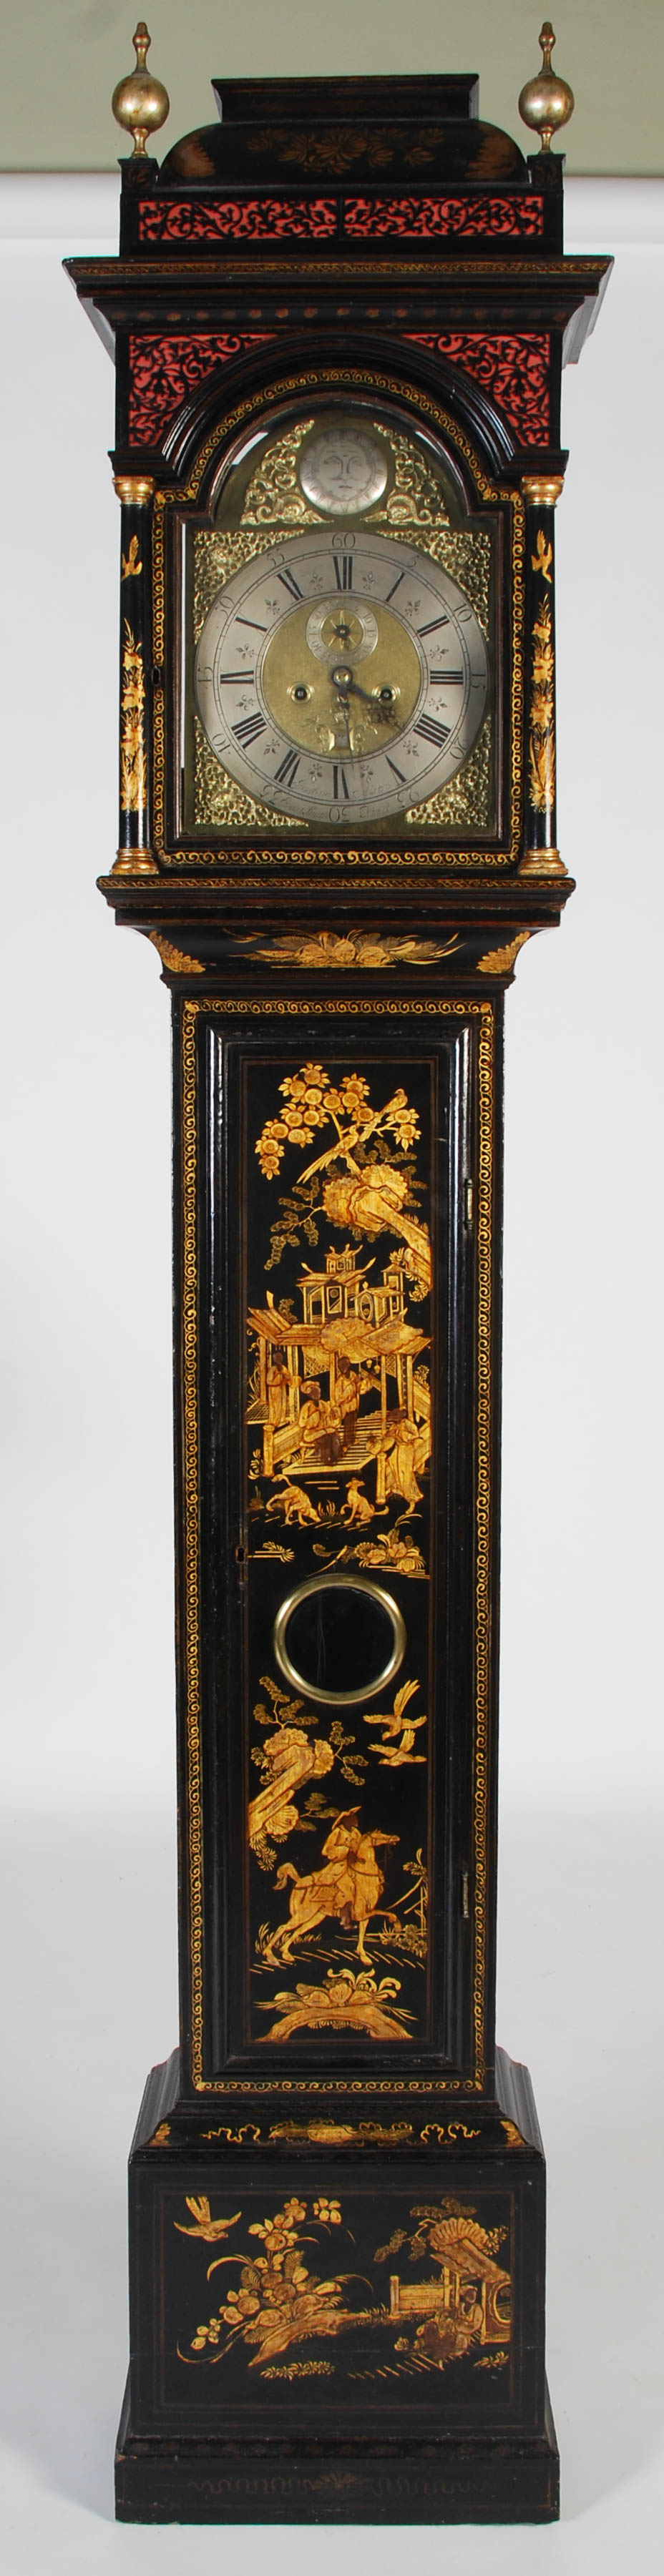 An 18th century black lacquer longcase clock, Joshua Alsop, East Smithfield, the brass dial with